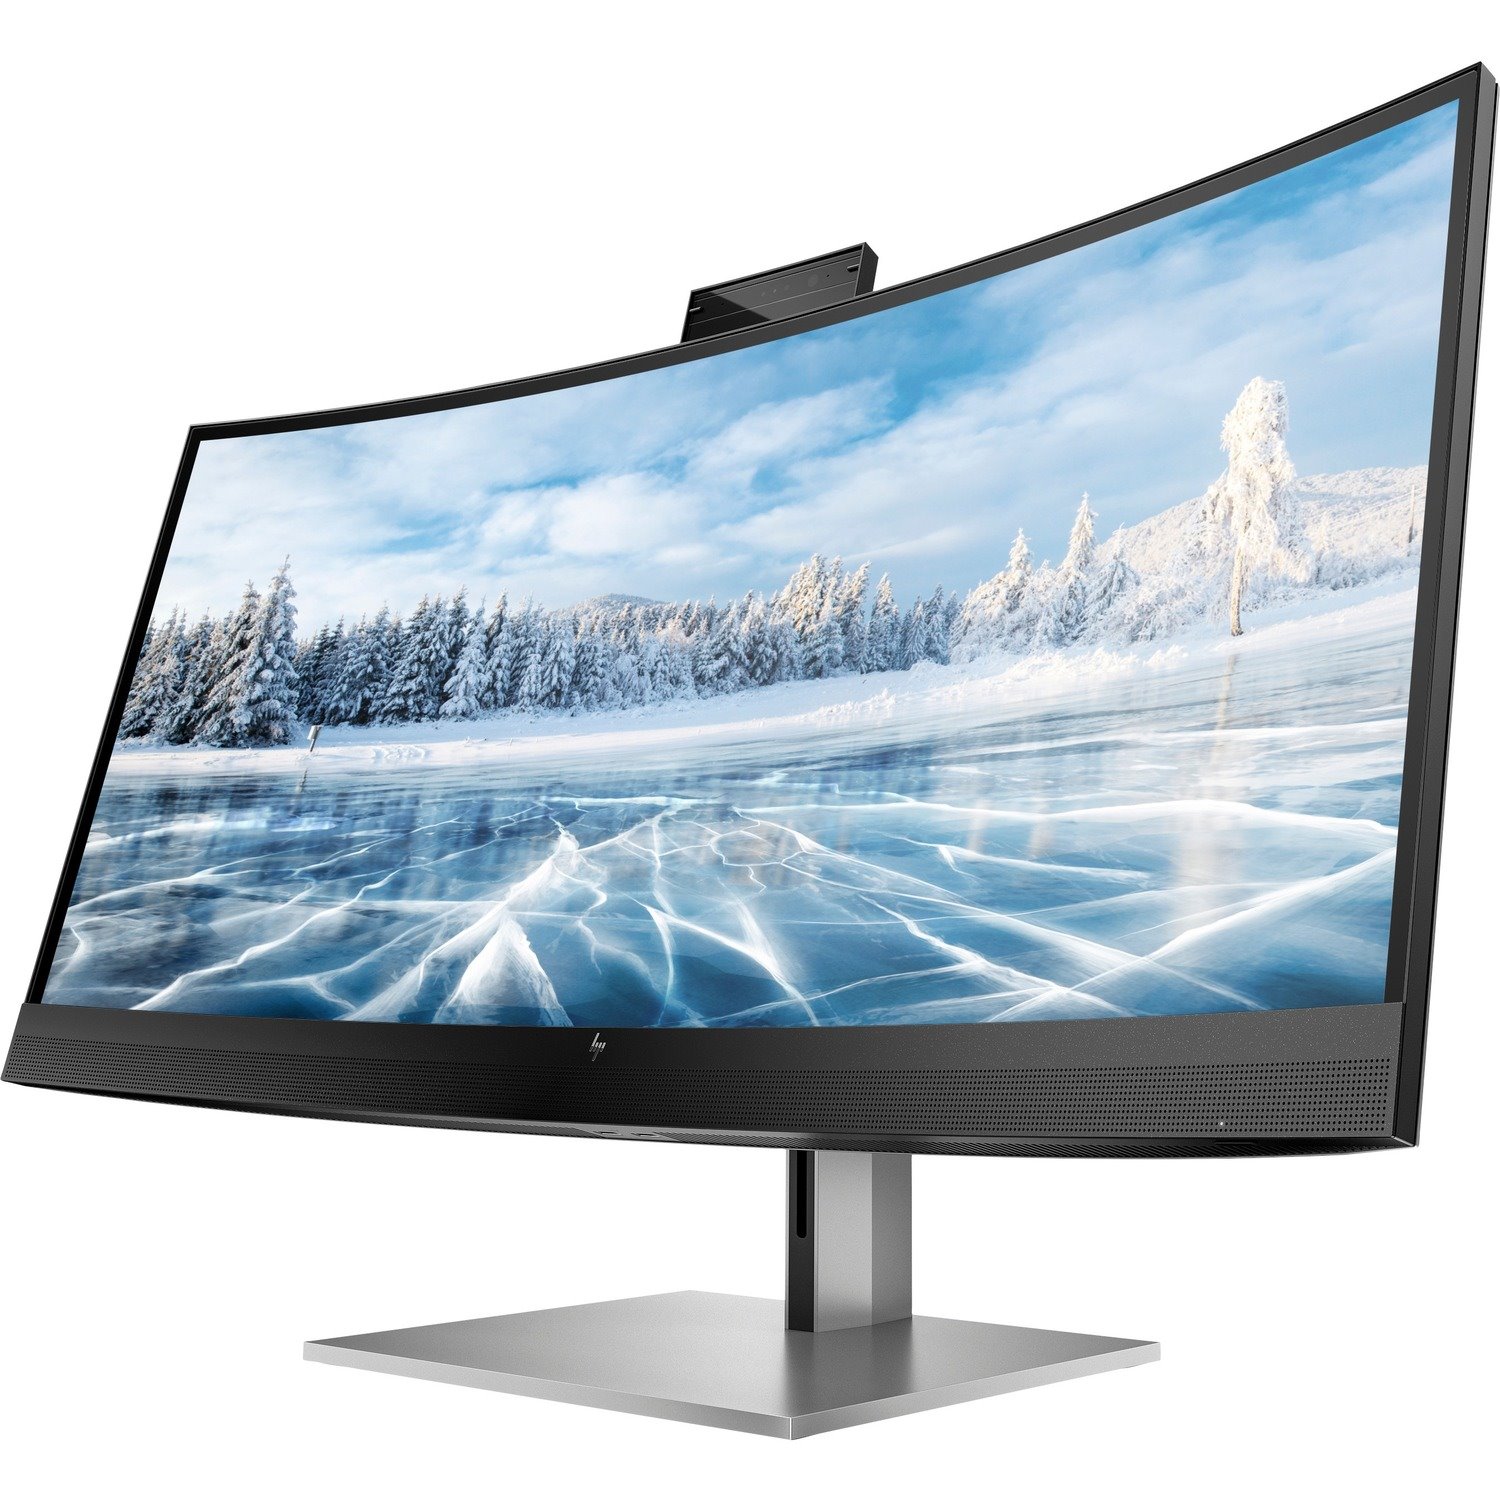 HP Z34c G3 34" Webcam WQHD Curved Screen LCD Monitor - 21:9 - Black/Silver